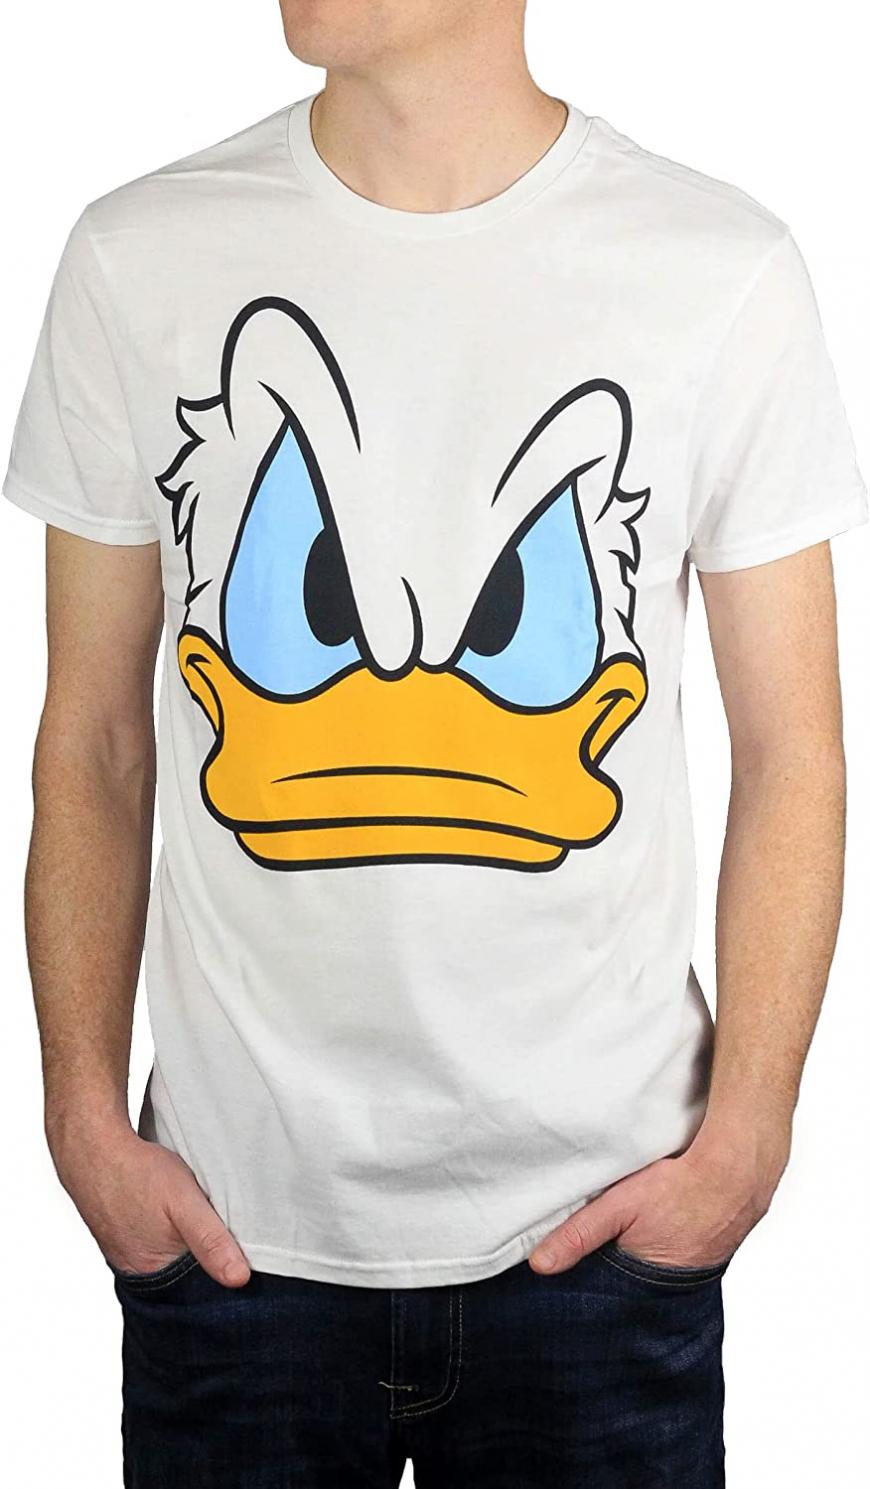 Disney Donald Duck T-Shirt Men Graphic Tshirt for Adult Disneyland Vintage Tee